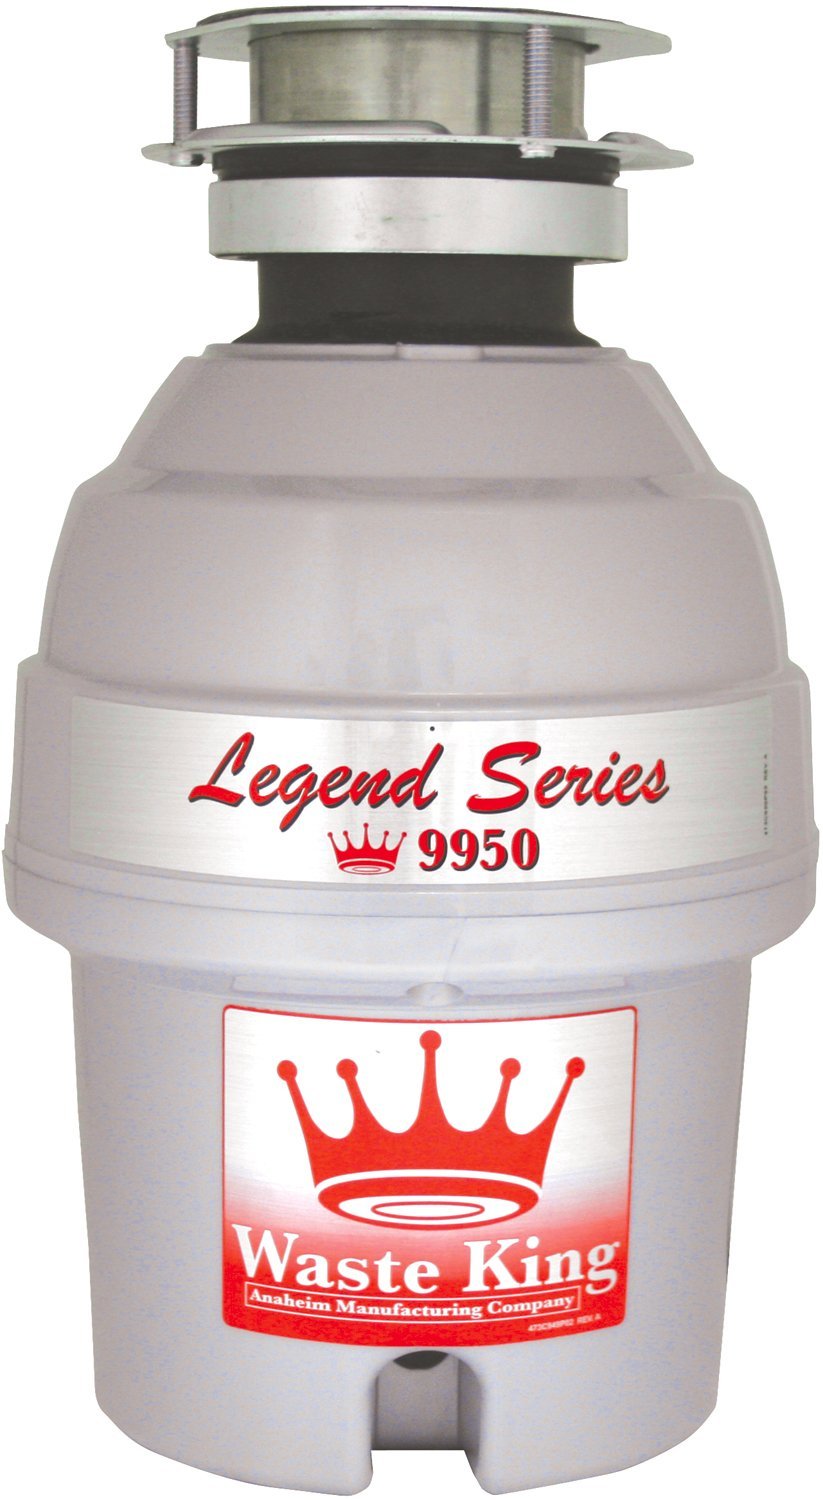 Waste King Legent Series 9950 3-Bolt Garbage Disposer, 3/4 Hp